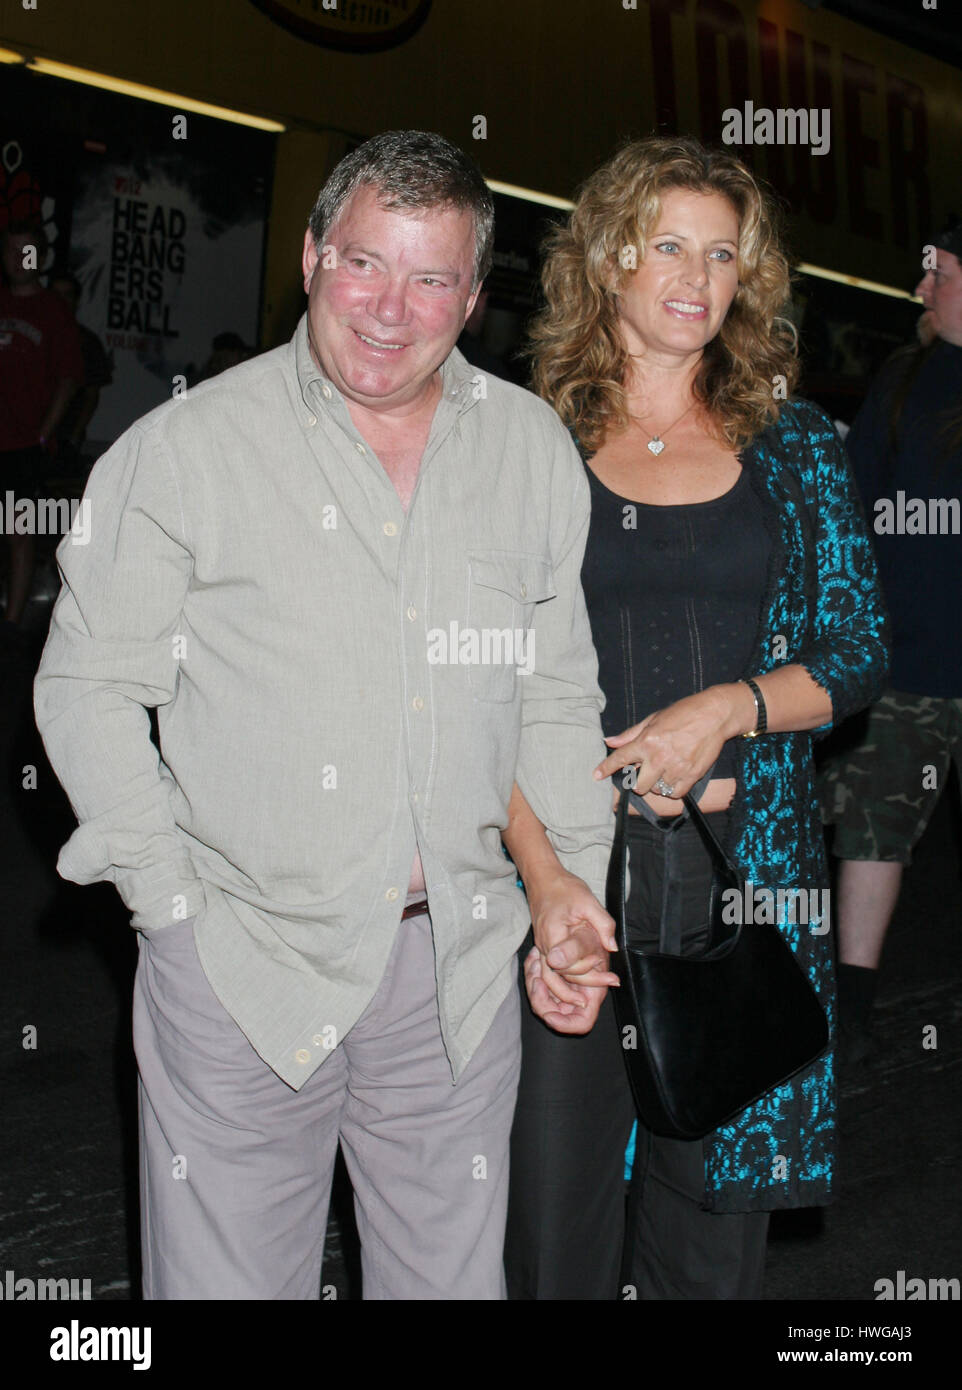 Actor William Shatner and his wife, Elizabeth, promoting his new album ...